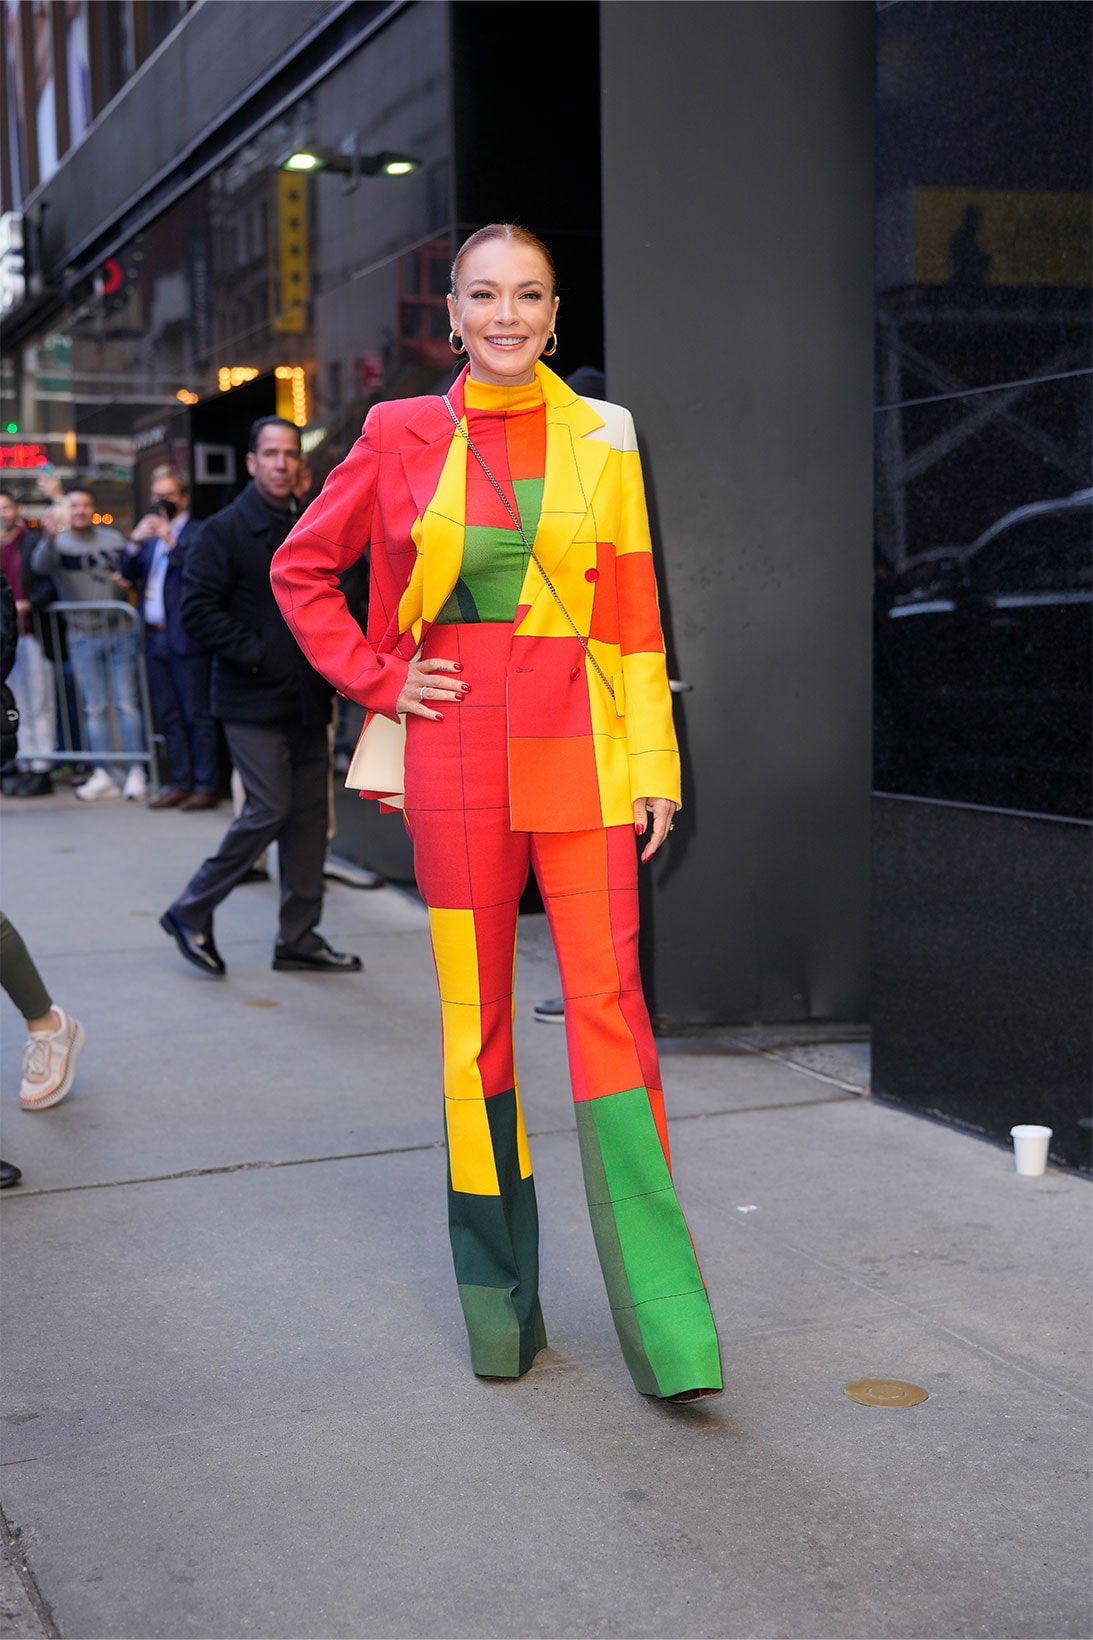 Lindsay Lohan Law Roach Celebrity Stylist Outfit Akris Images Zendaya Feud 